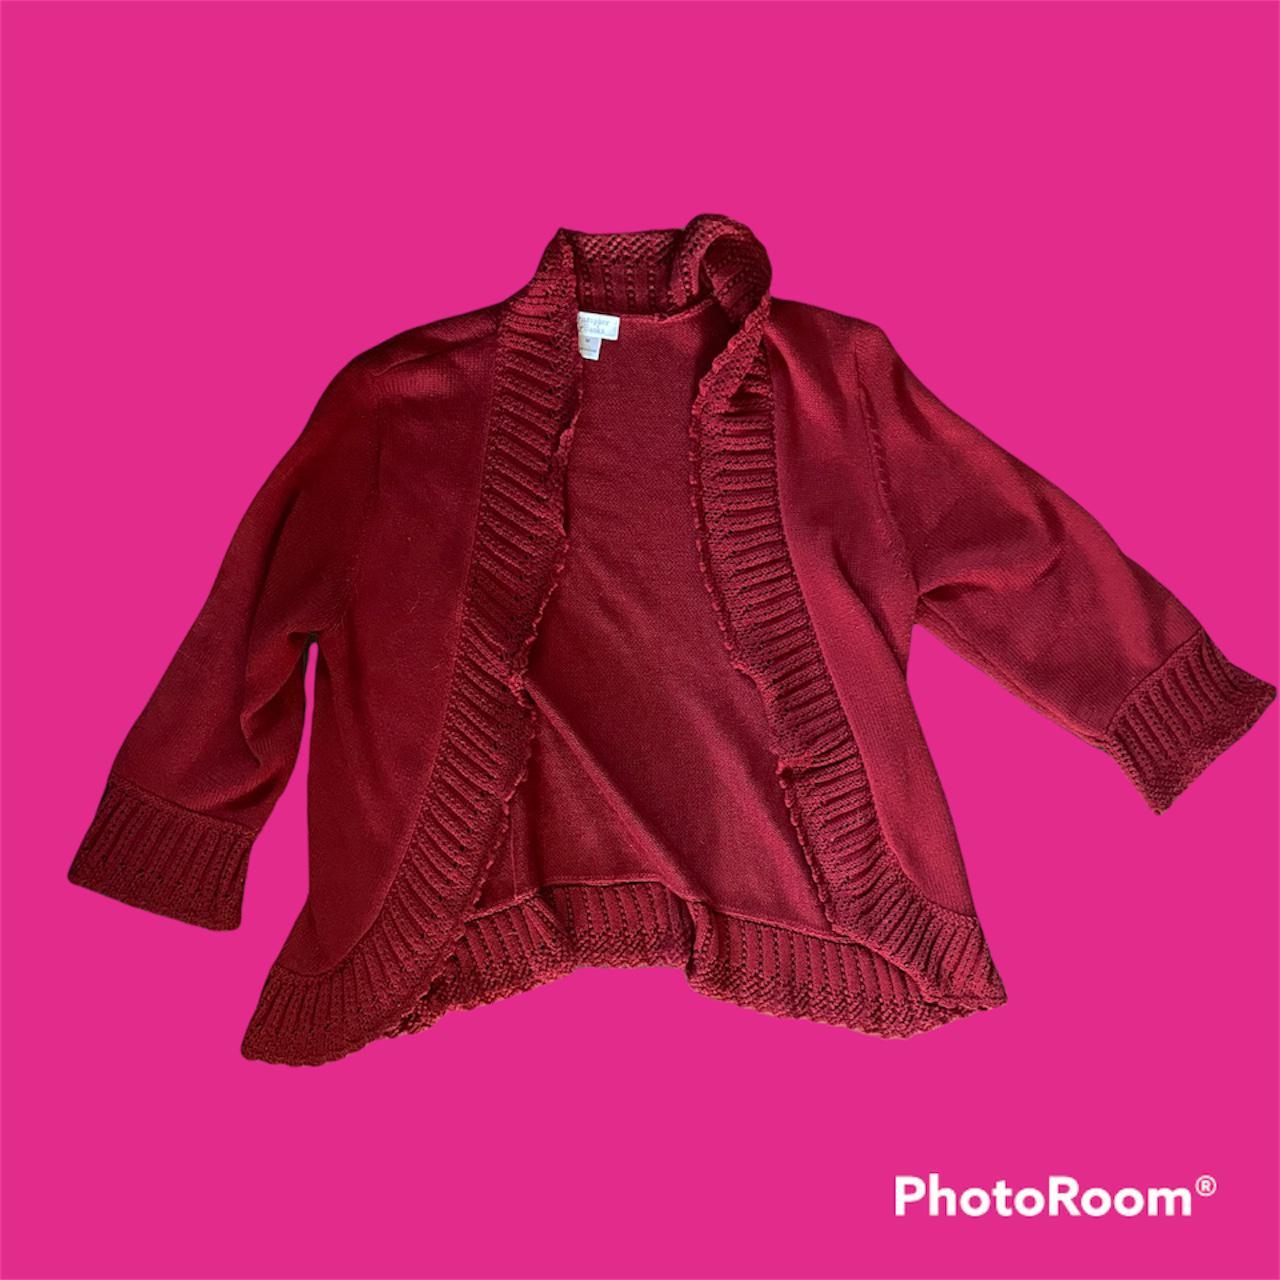 Product Image 1 - Vintage Red Knit Cardigan!❄️ 
Super